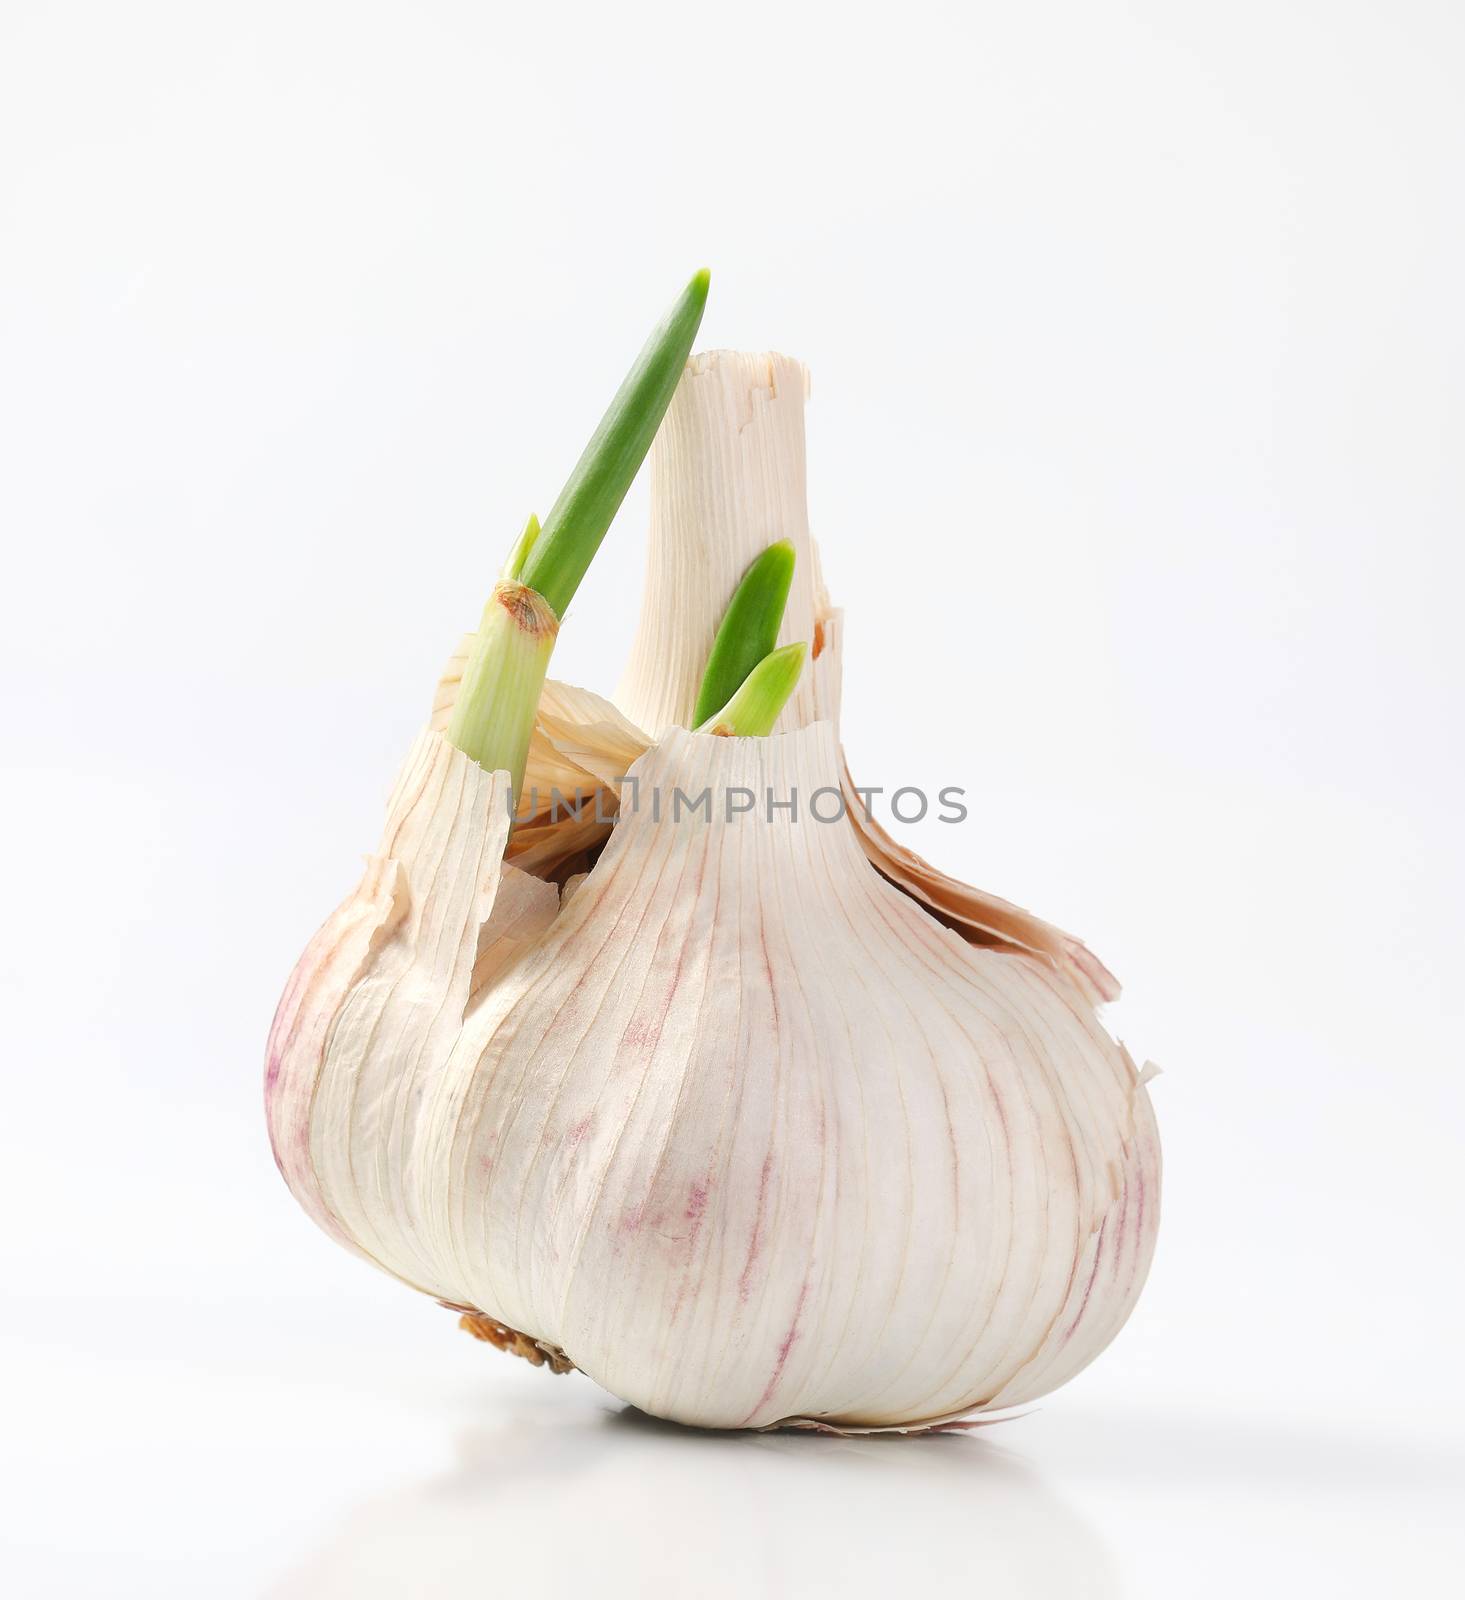 bulb of fresh garlic on white background